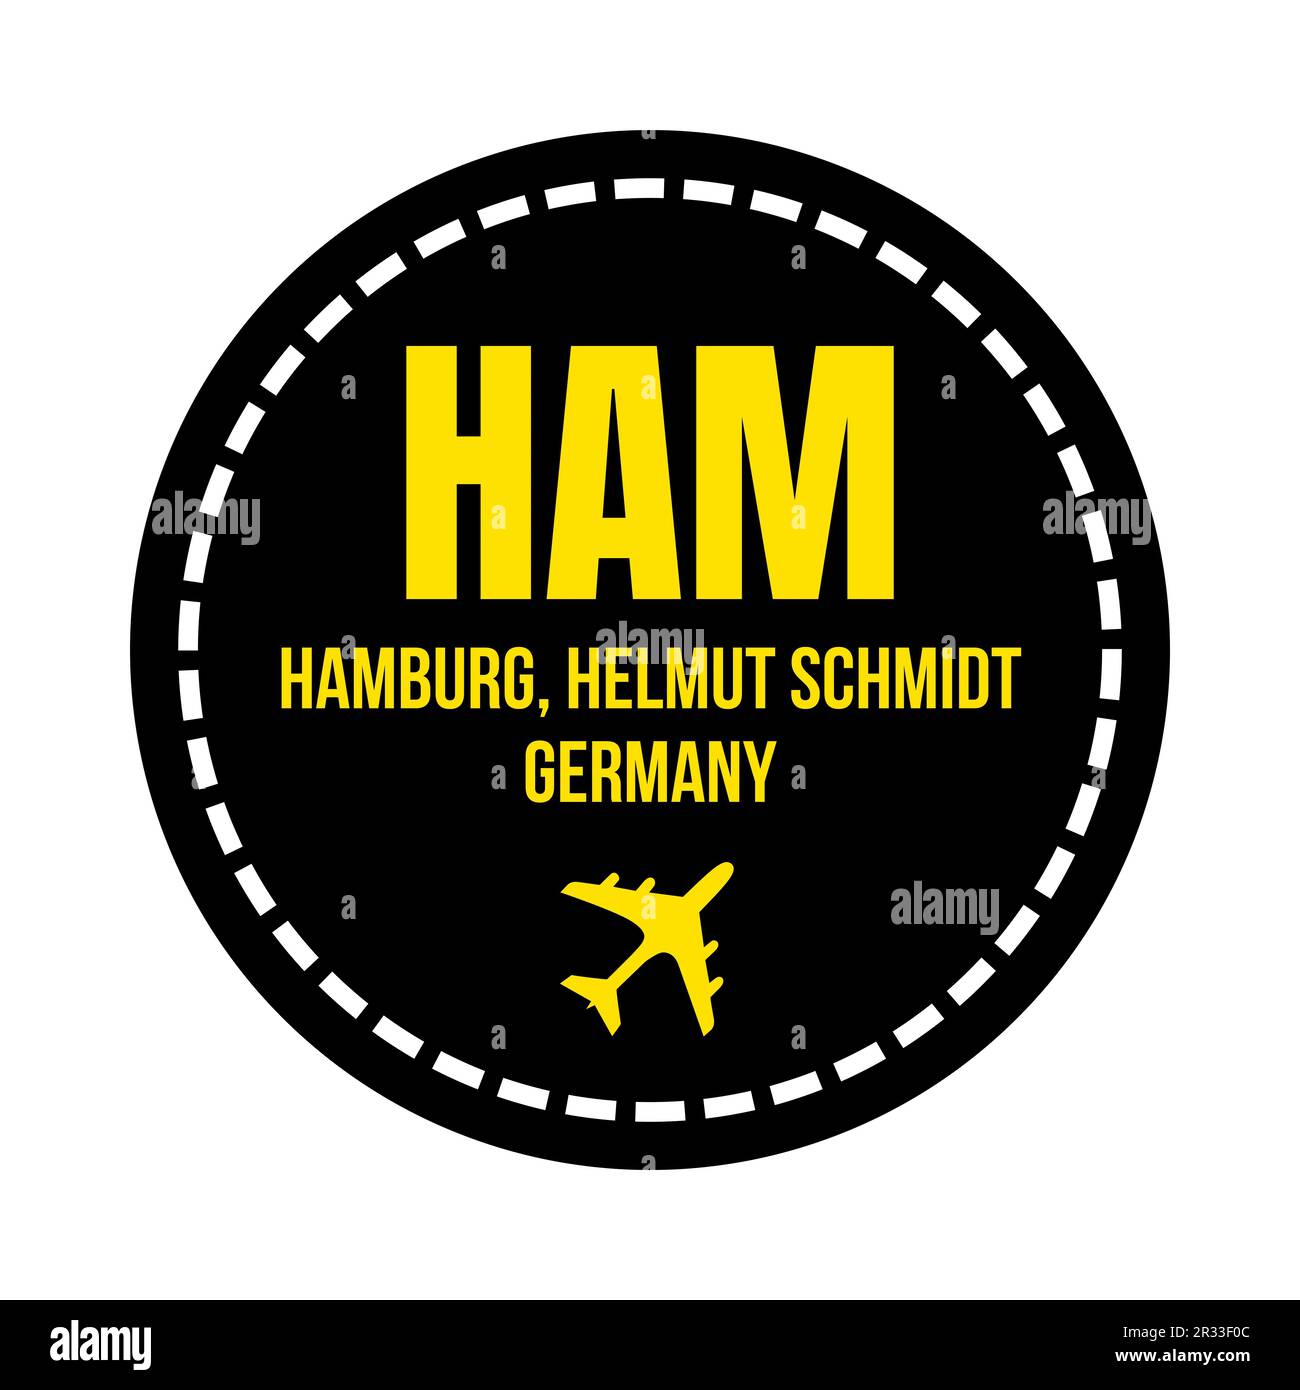 HAM Hamburg airport symbol icon Stock Photo